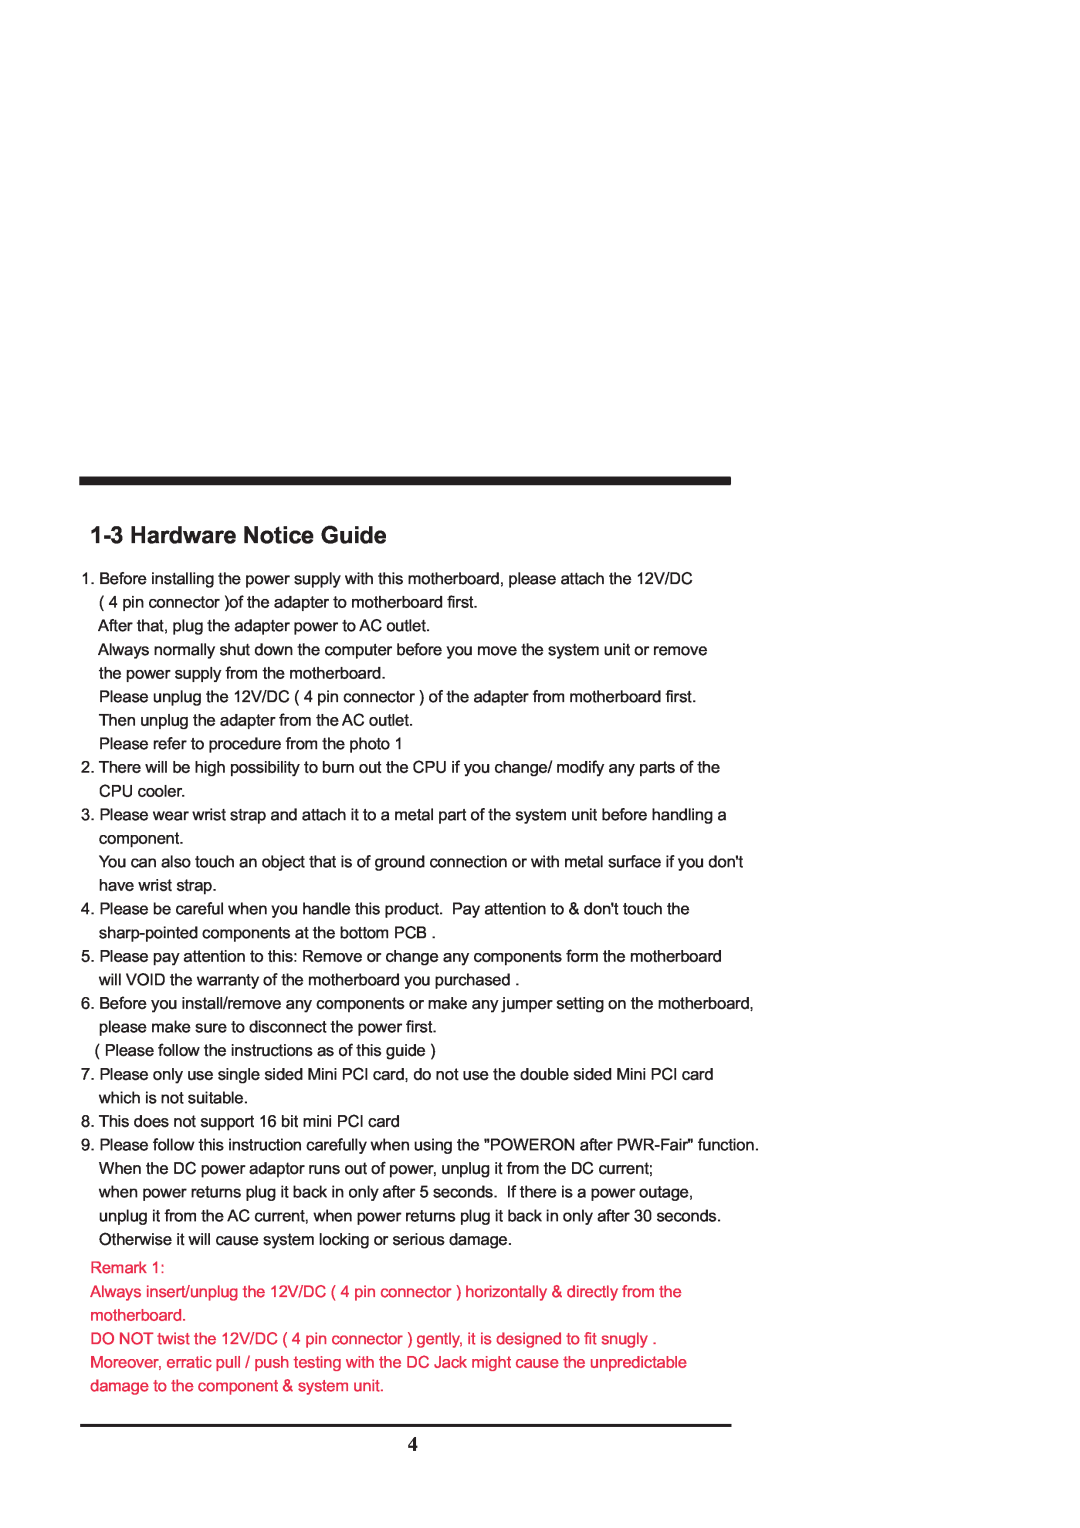 Intel CV702A, CV700A manual 1-3Hardware Notice Guide 